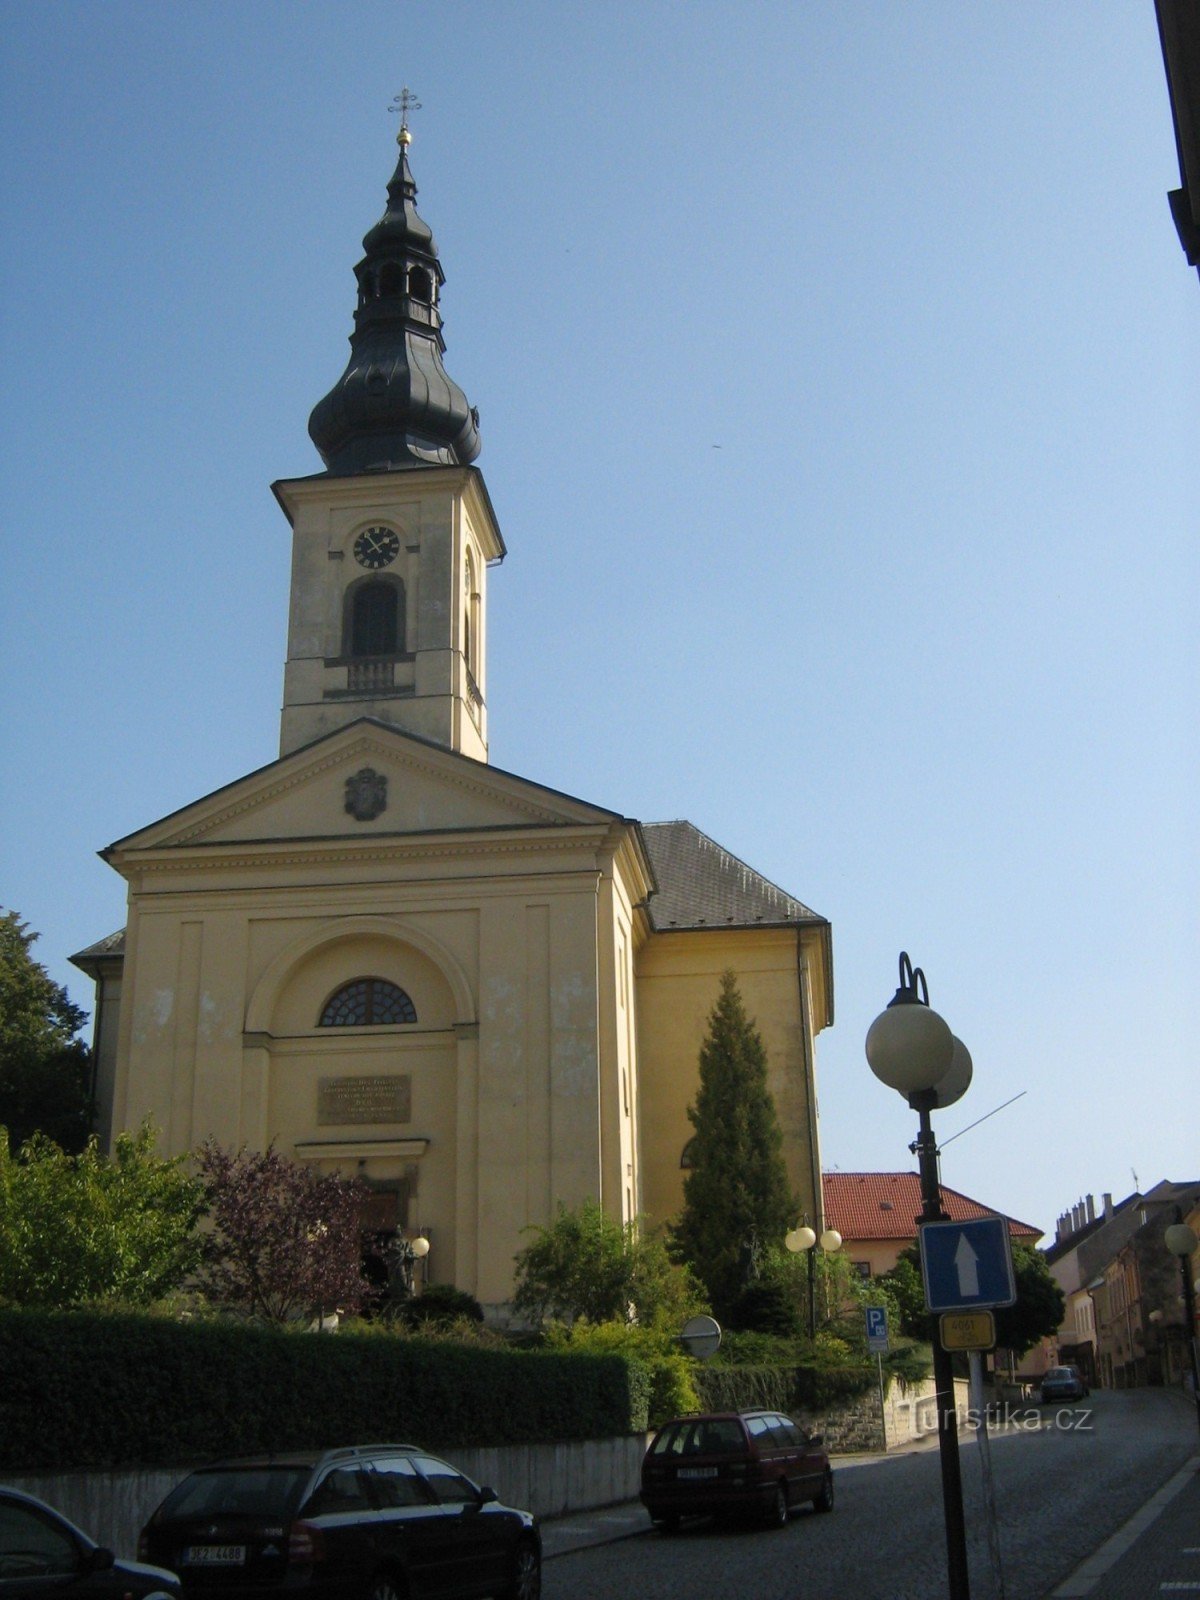 Česká Třebová - Kościół św. Jakub Większy